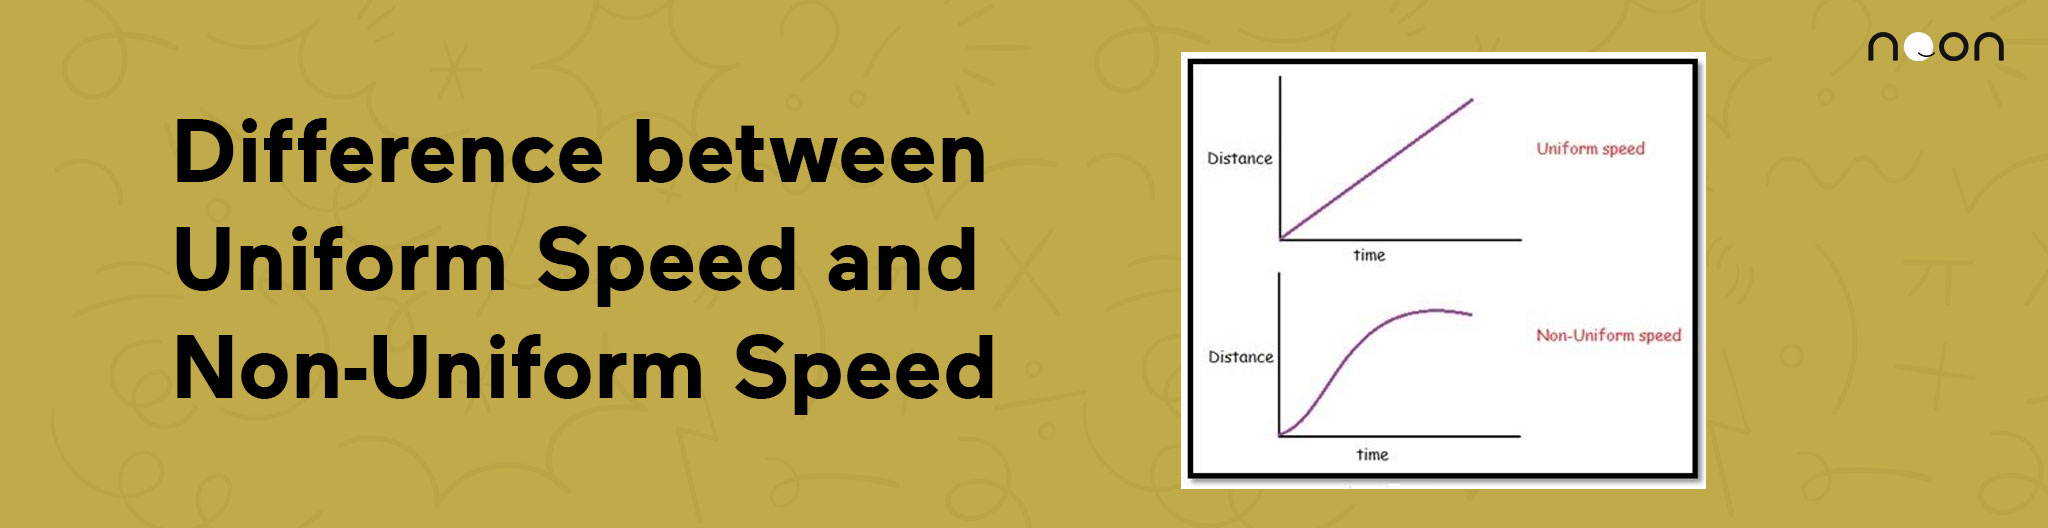 Uniform Speed vs Non-Uniform Speed